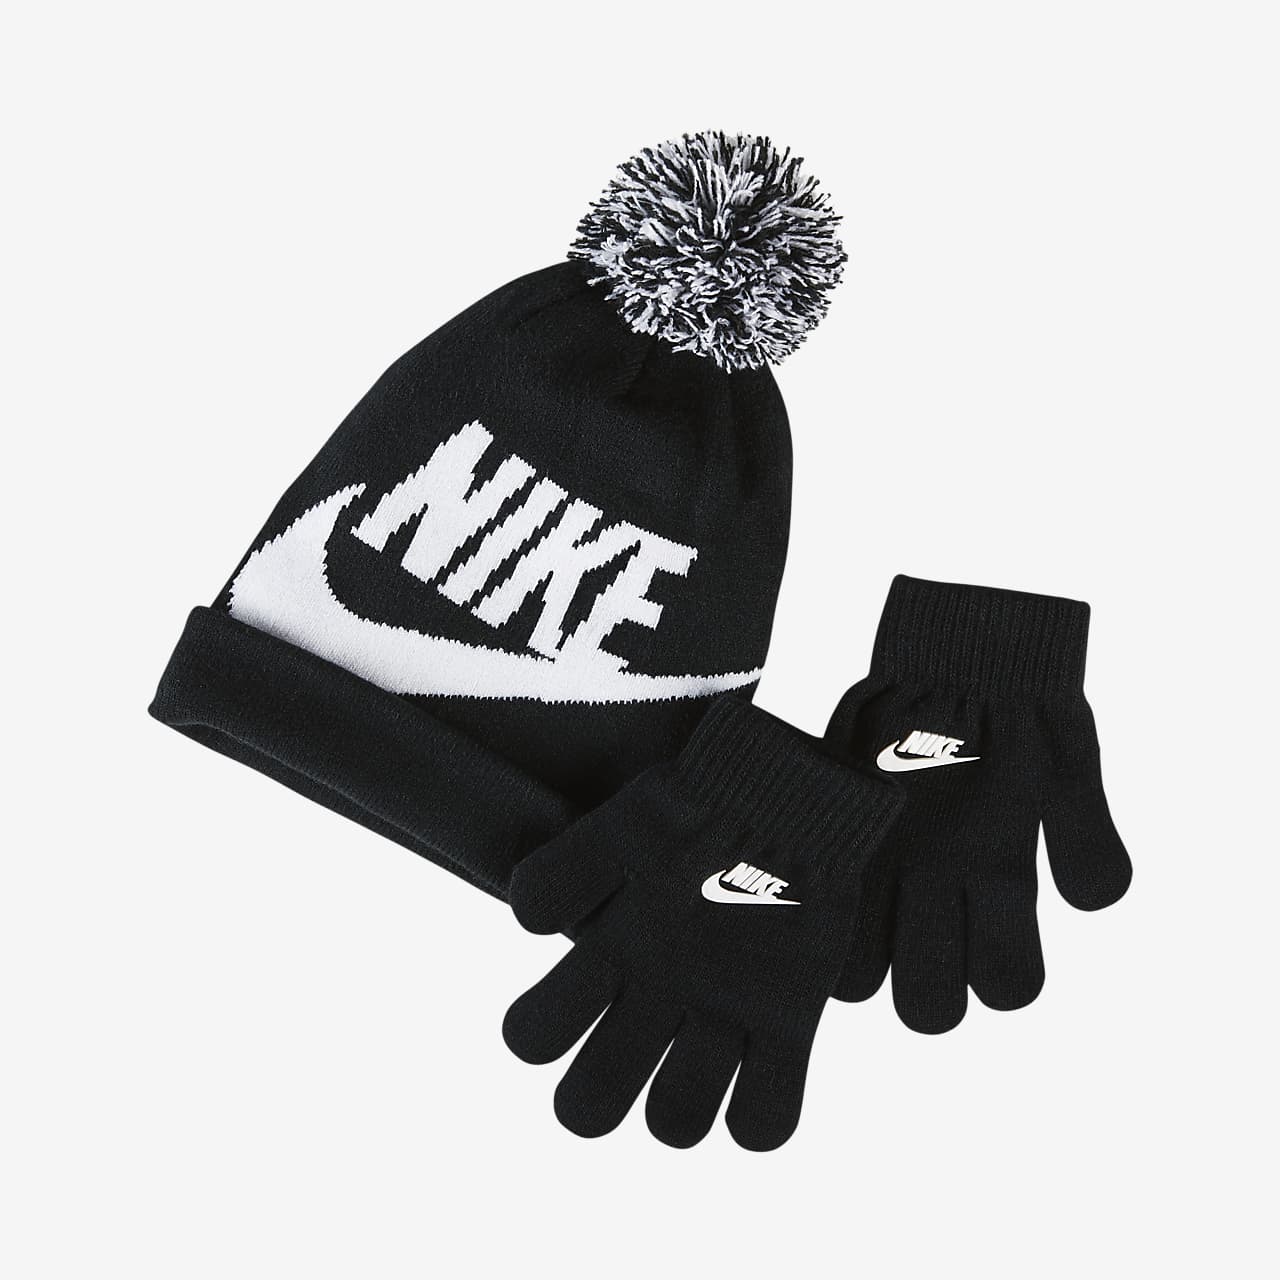 Nike Ensemble bonnet et gants pour garçon : : Mode